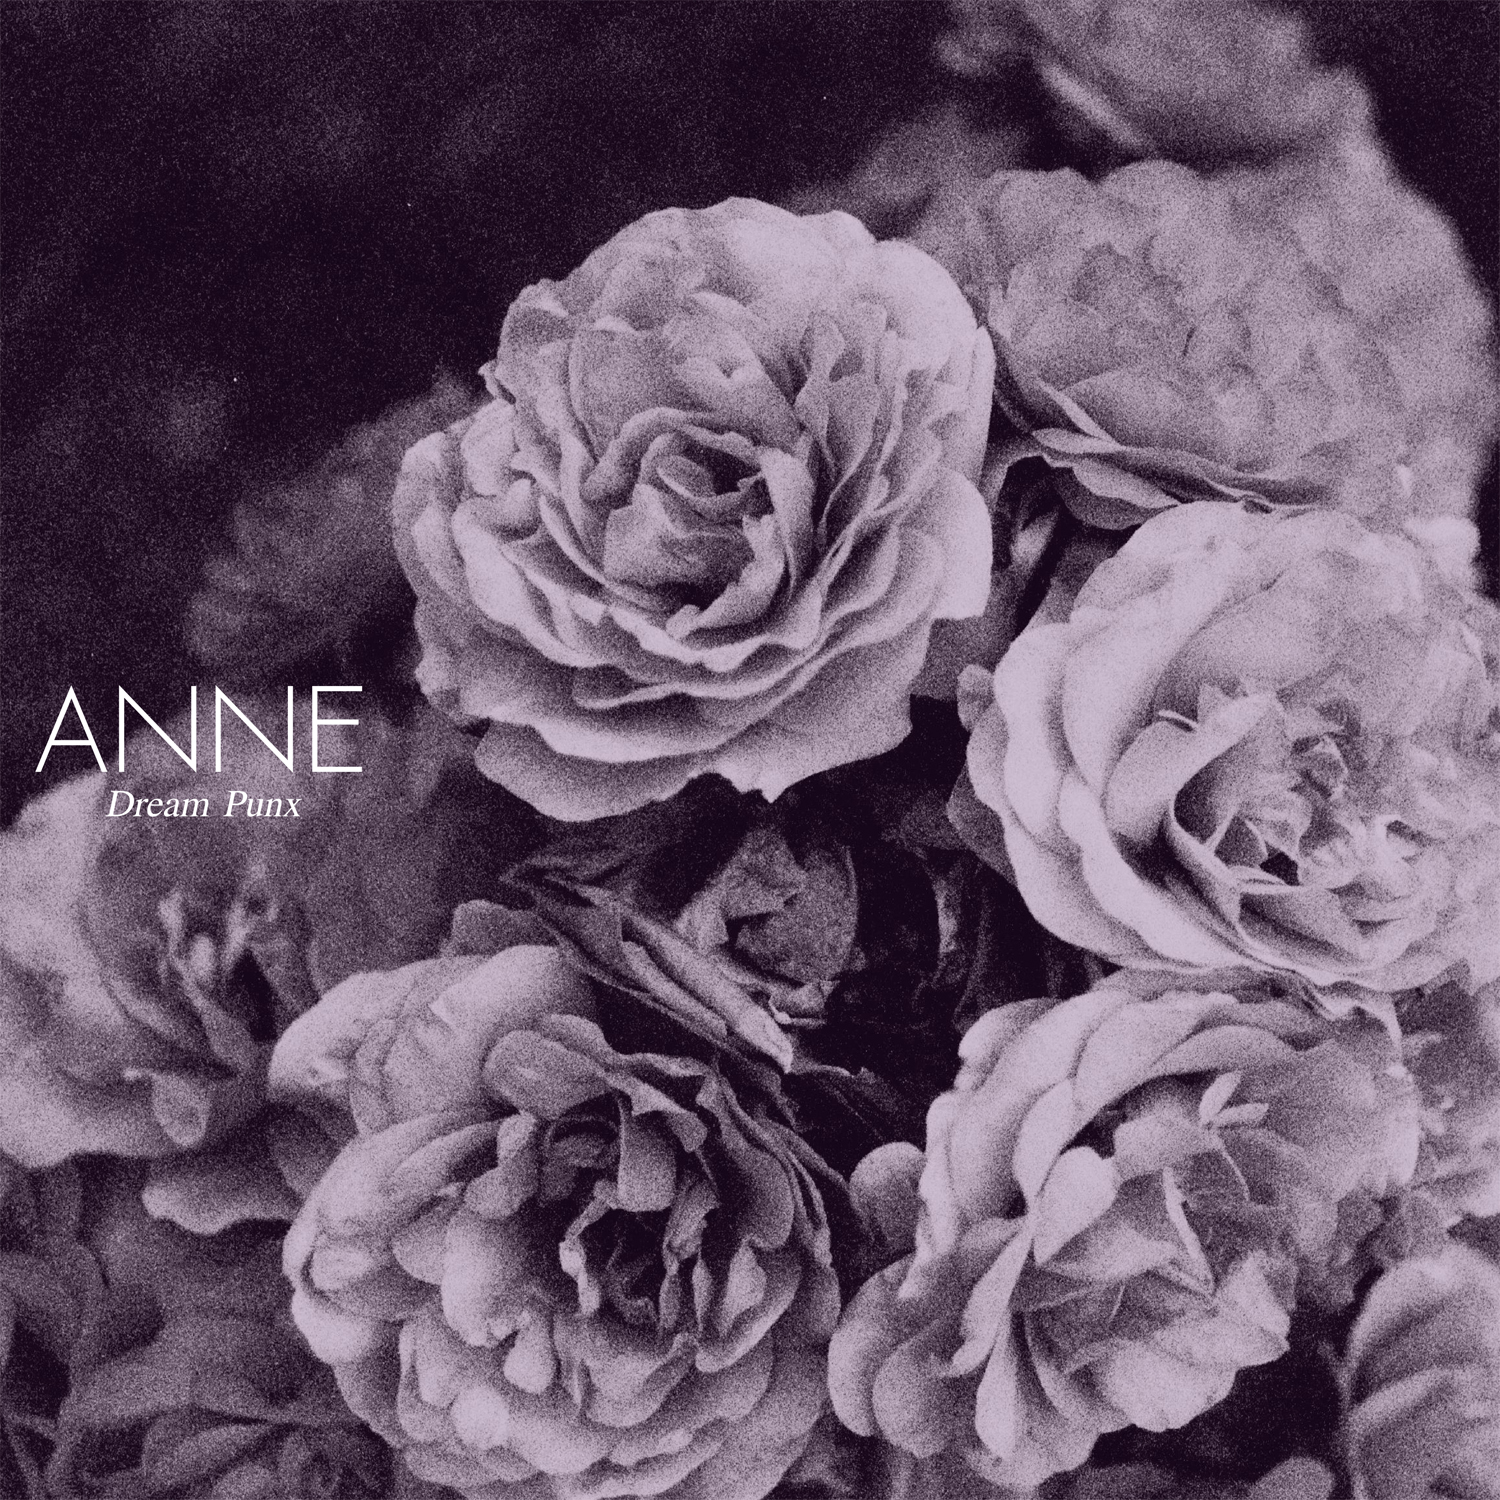 A389 Recordings releasing LP by Portland shoegaze punks Anne